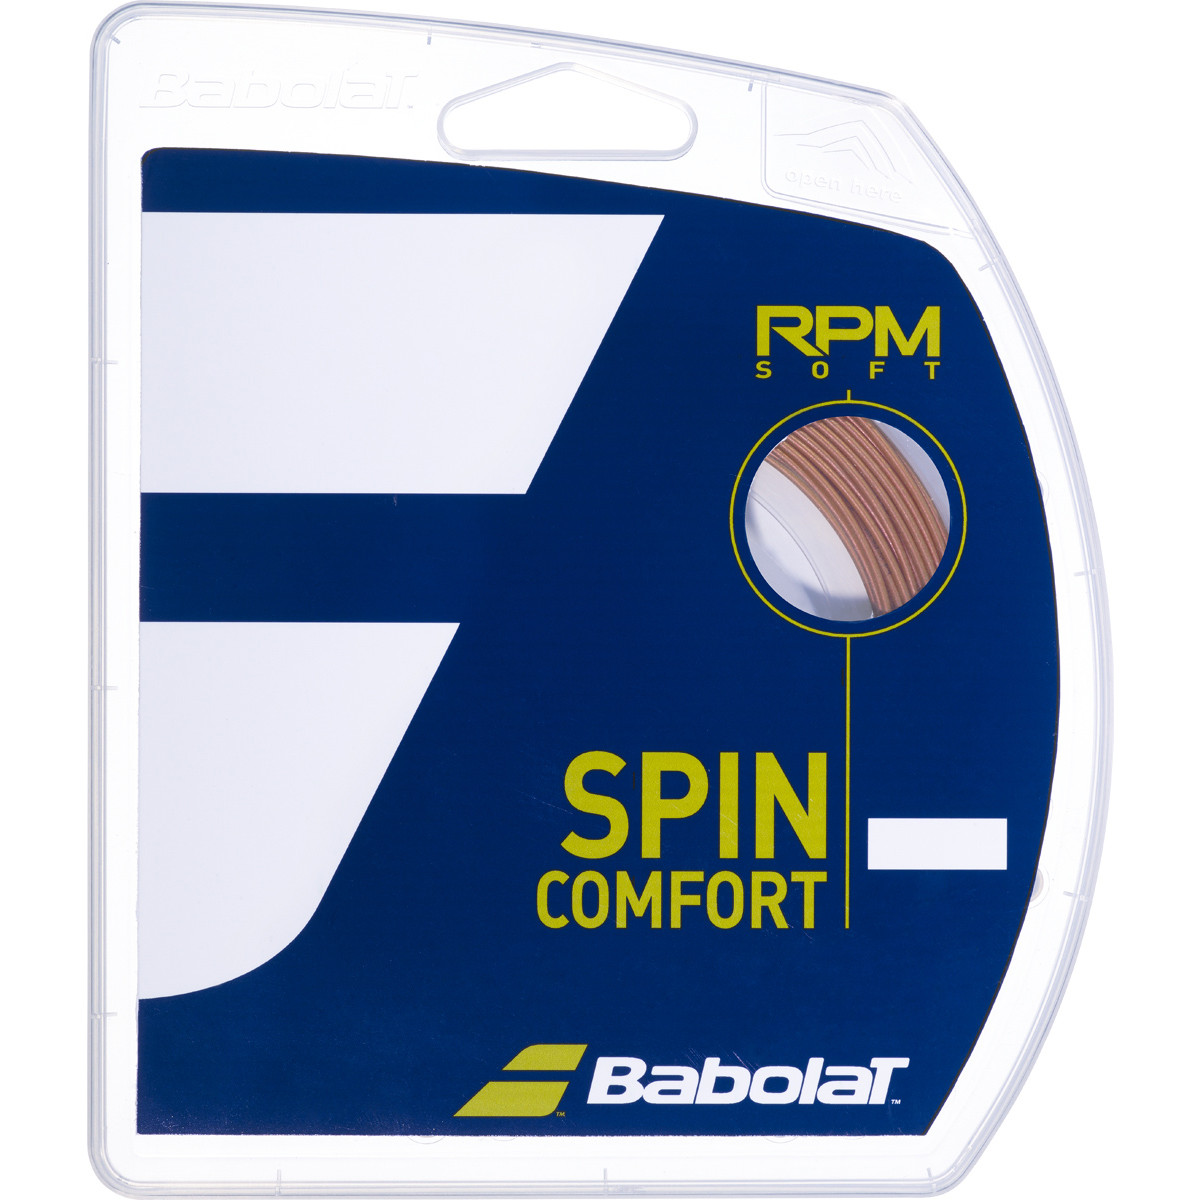 Cordage Babolat RPM Soft Marron (12 mètres)